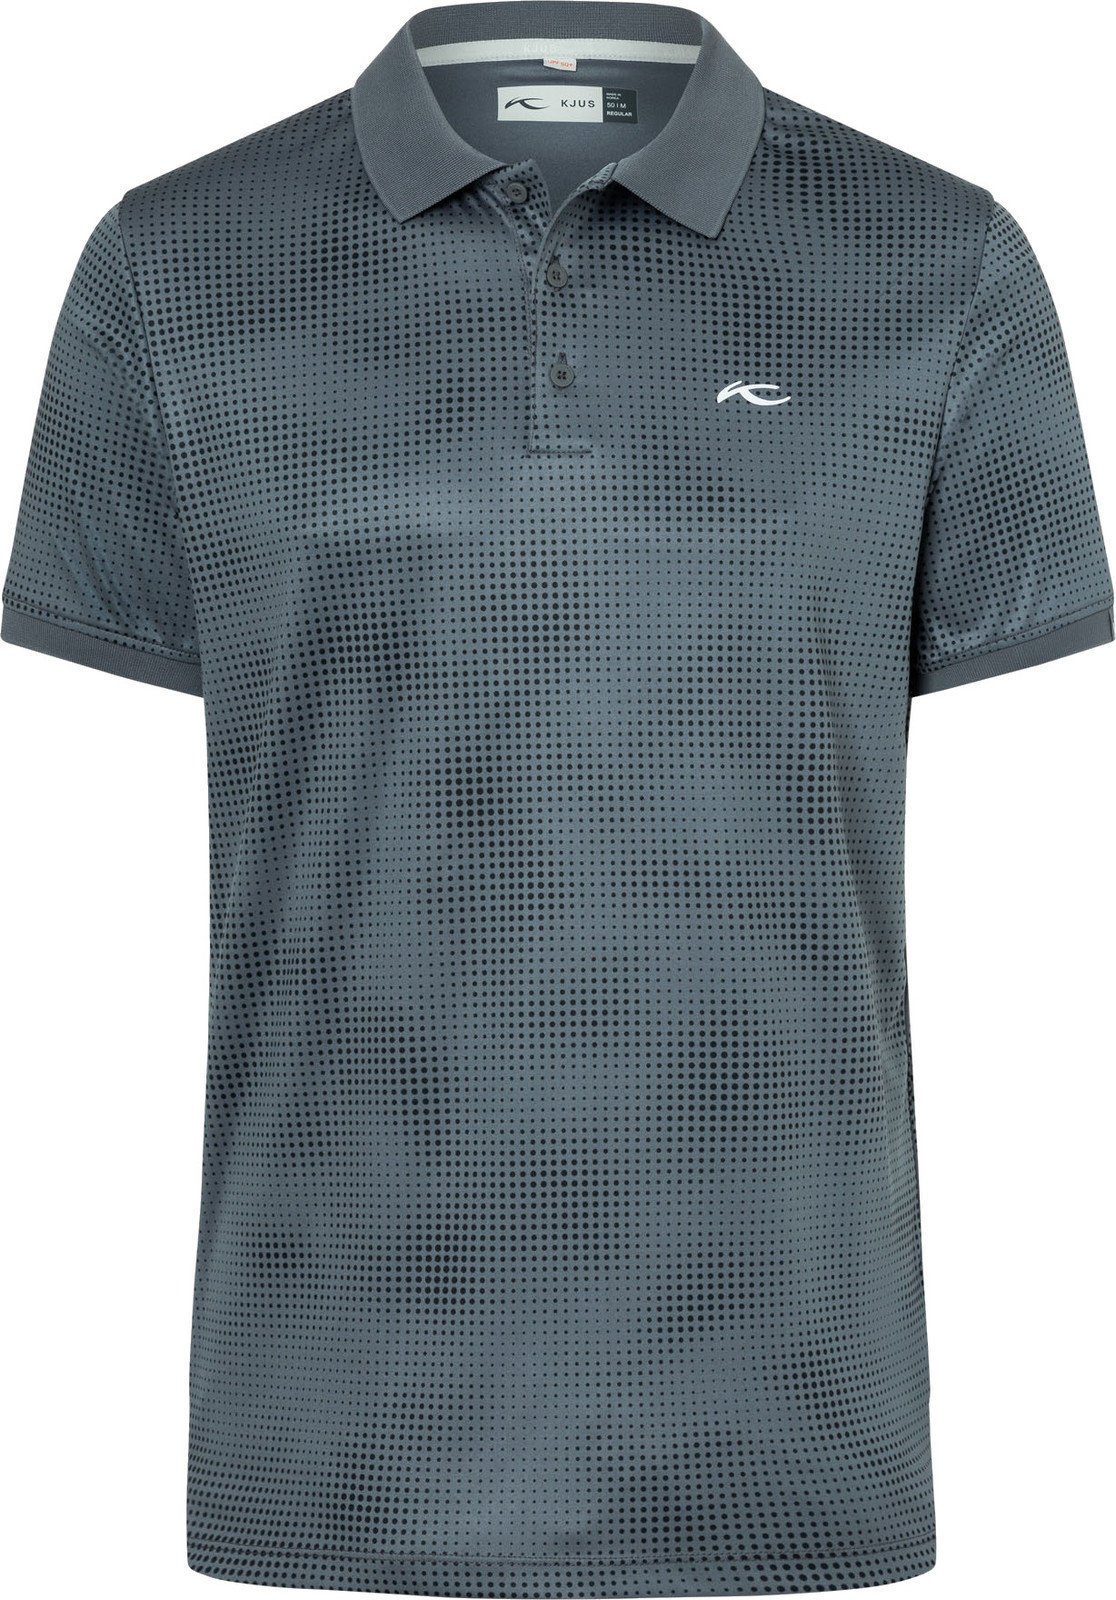 Polo Shirt Kjus Spot Printed Steel Grey 52